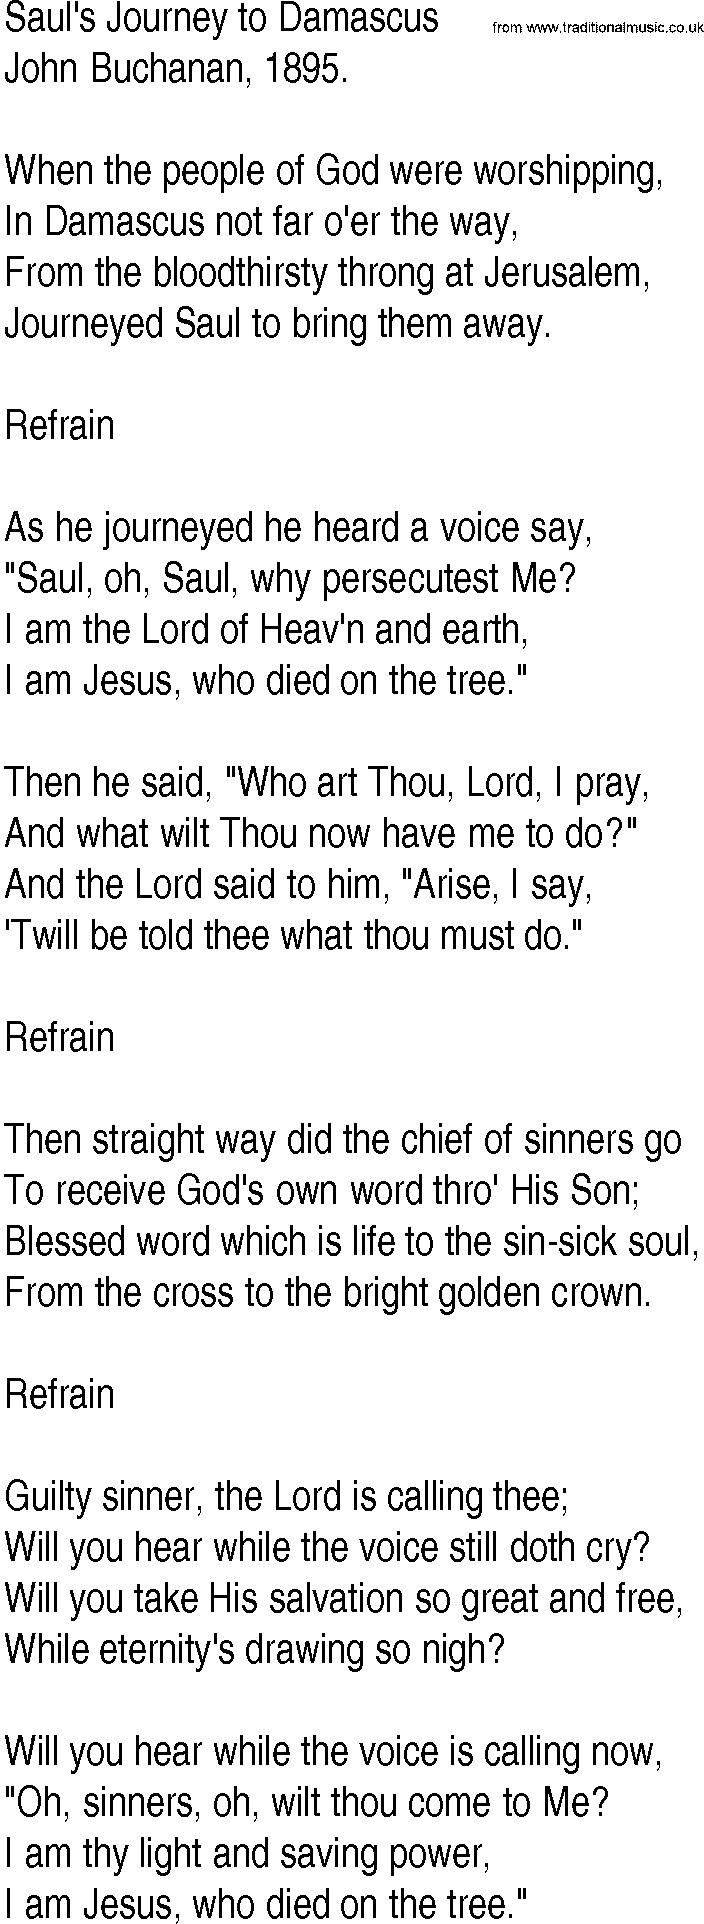 Hymn and Gospel Song: Saul's Journey to Damascus by John Buchanan lyrics